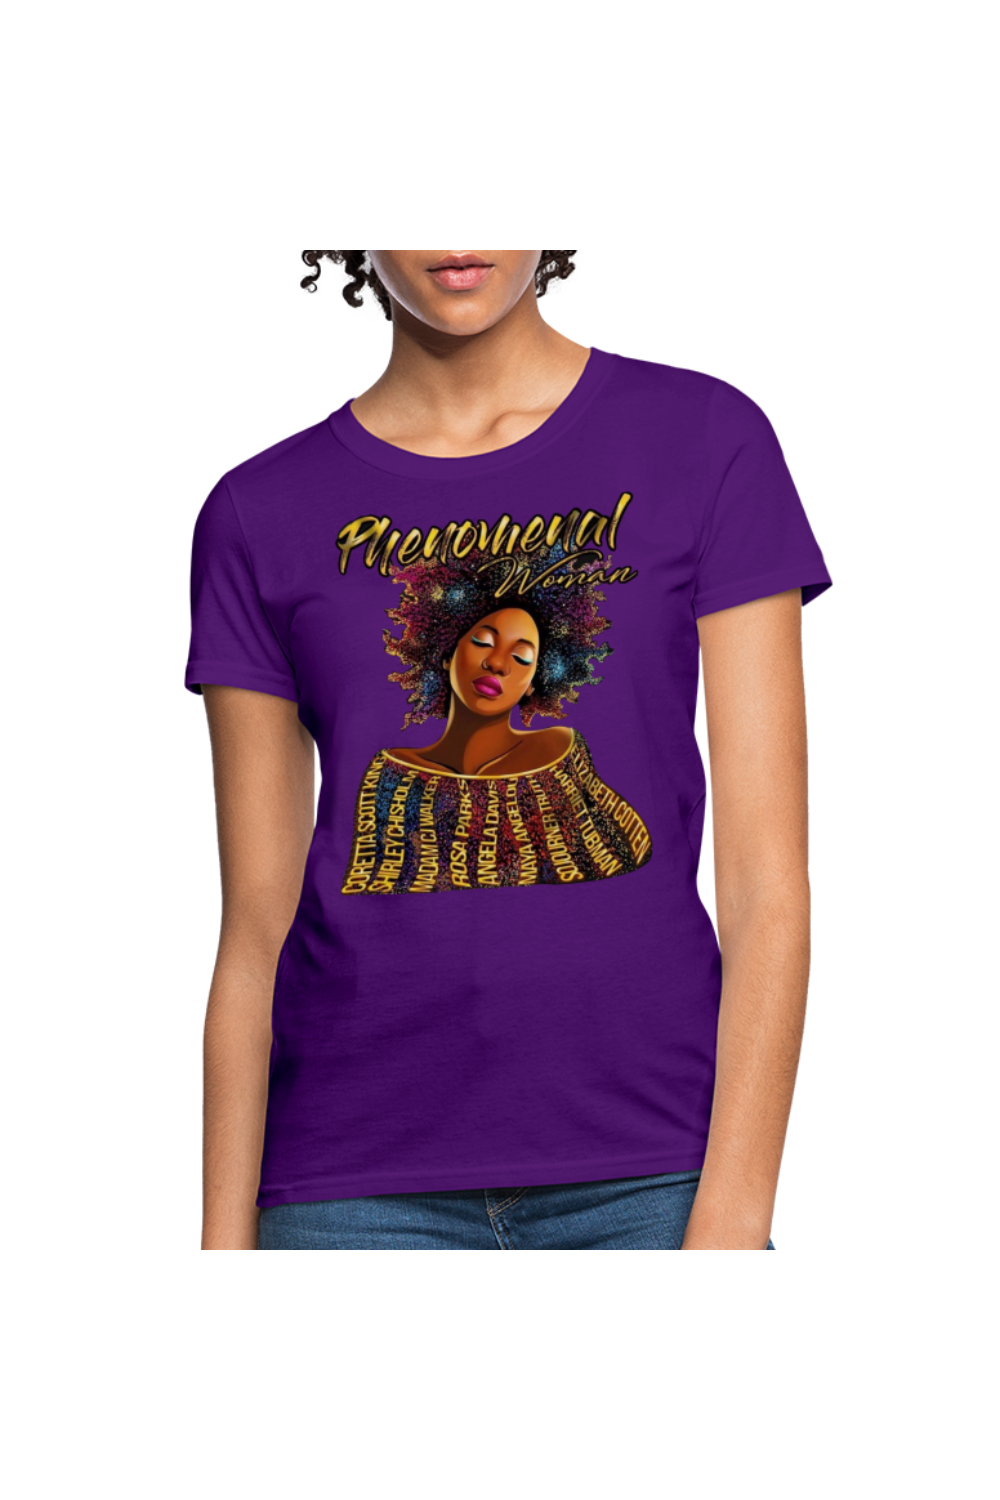 African American Women's Phenomenal Woman Short Sleeve T-Shirt - purple